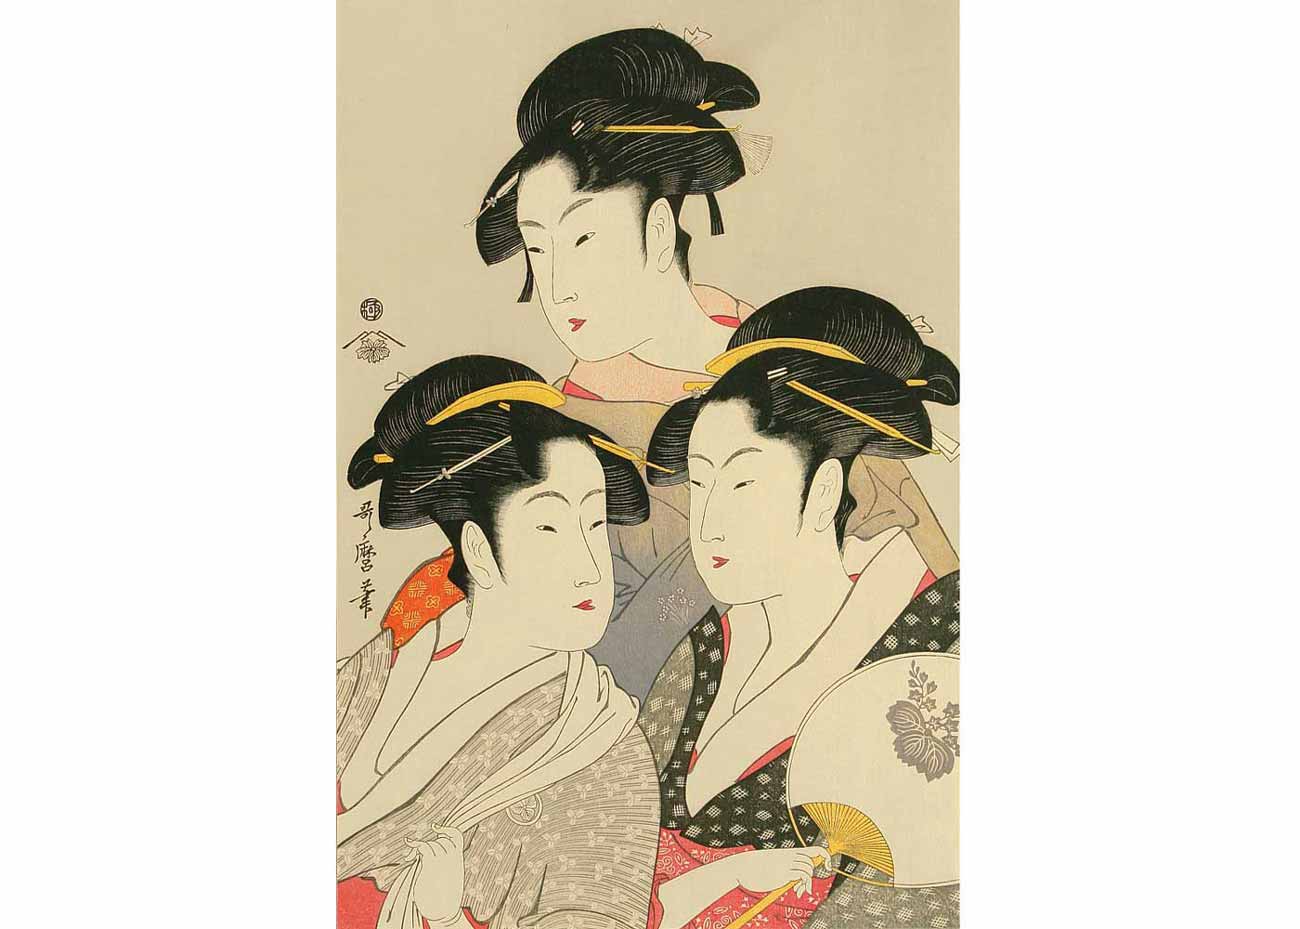 Japanese art, History, Characteristics, & Facts